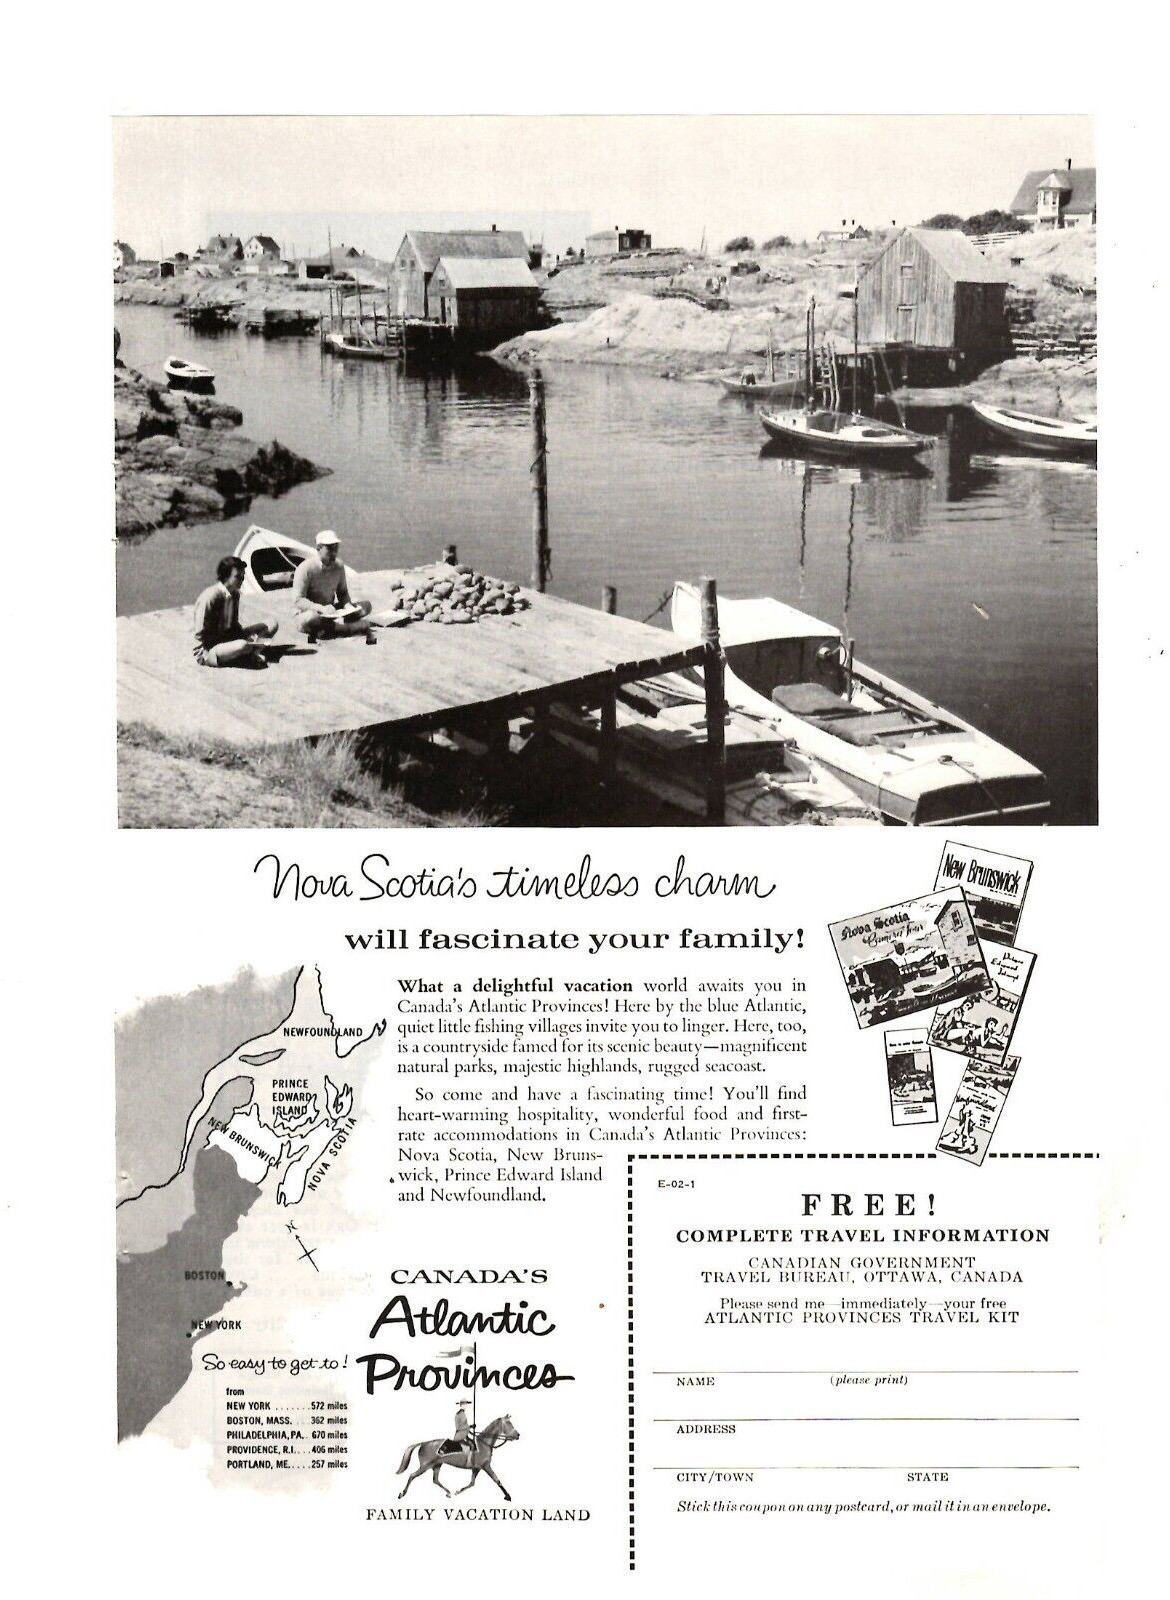 1959 Print Ad Canadian Government Travel Bureau Canada's Atlantic Provinces